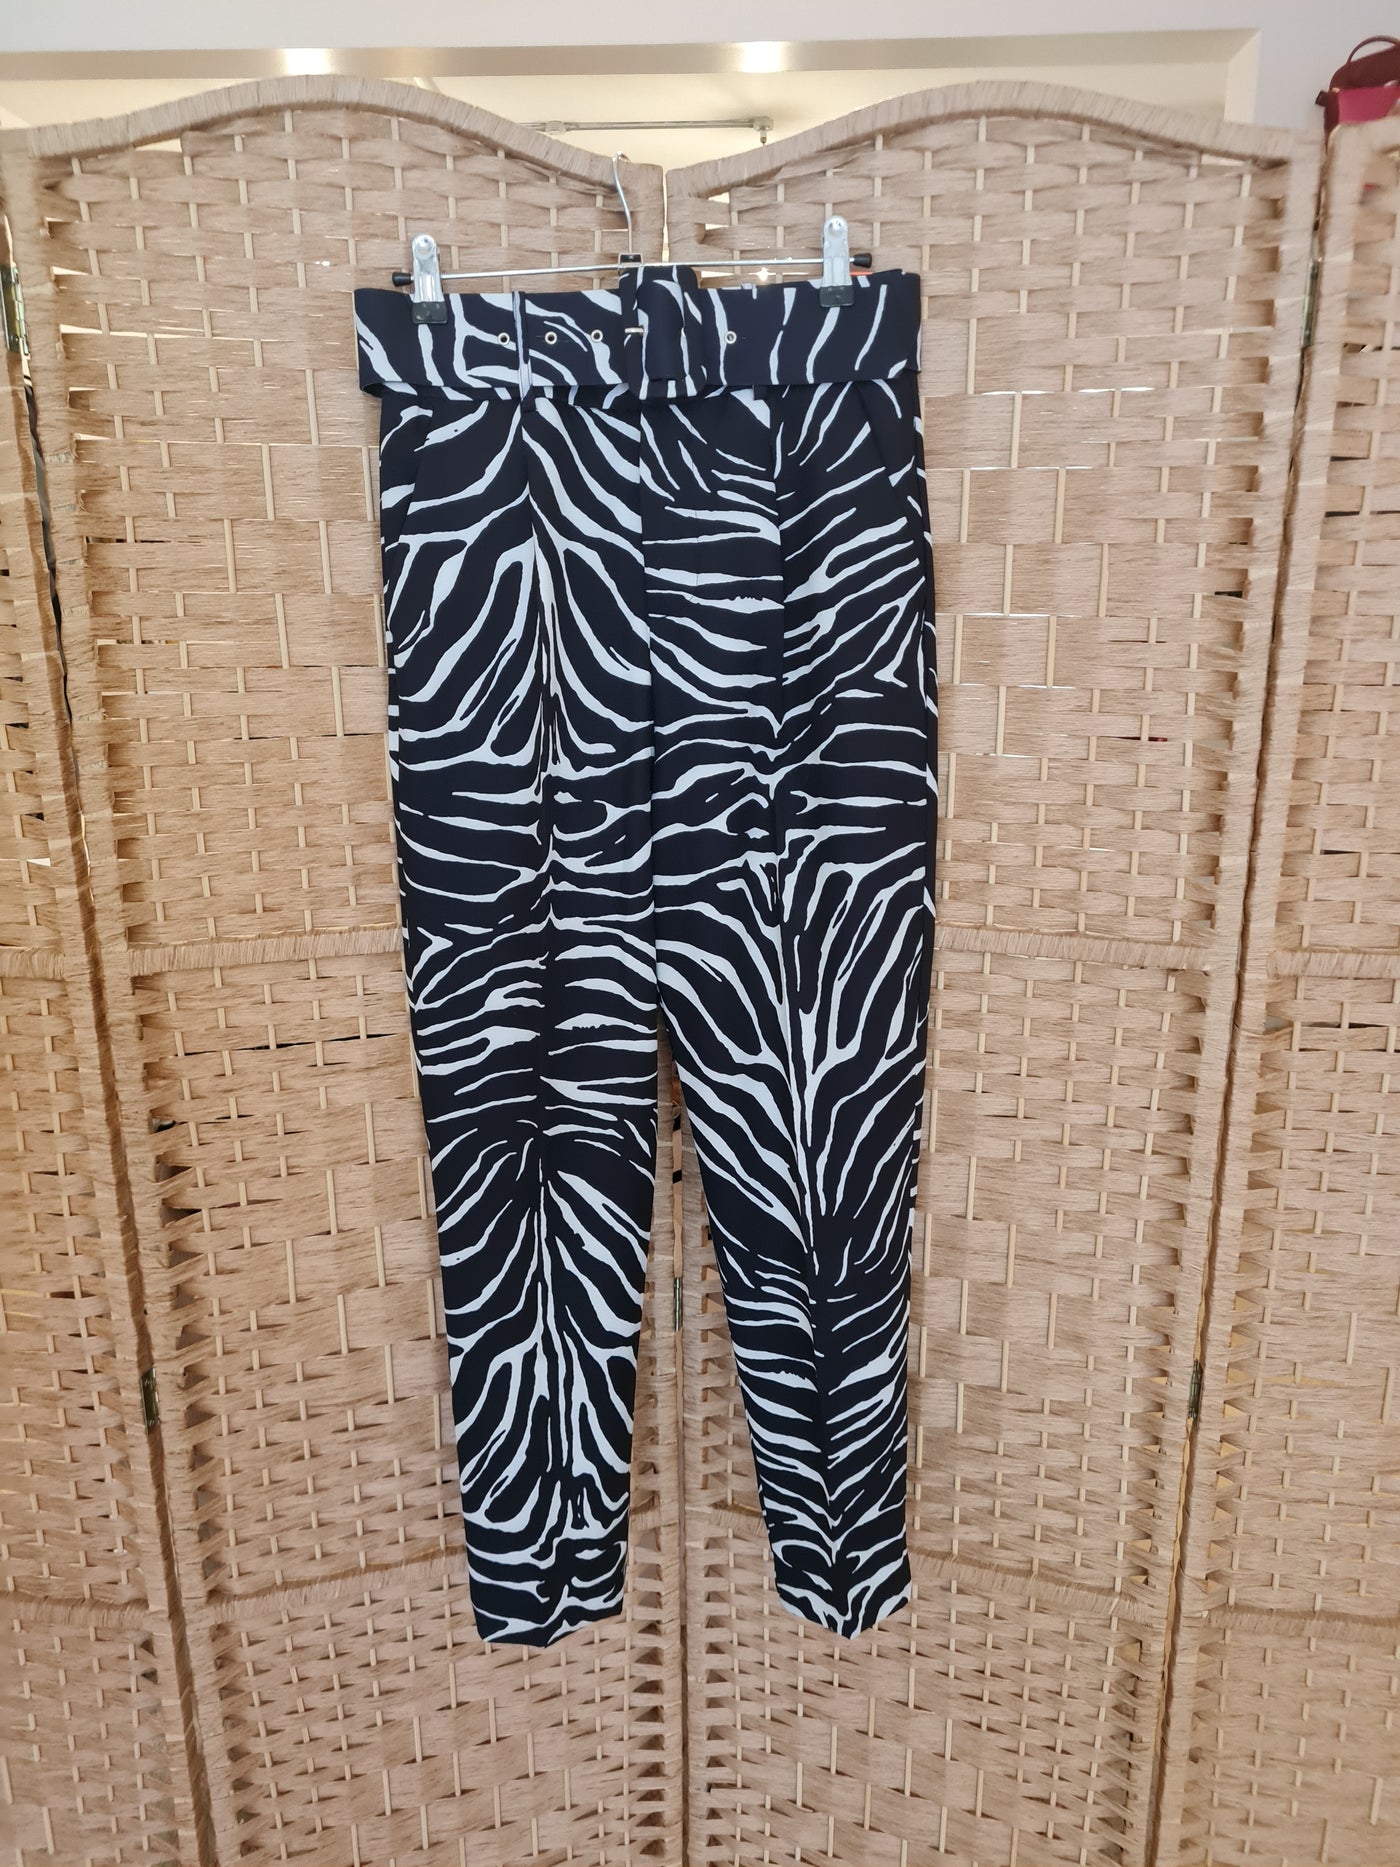 Lucy Wang Zebra Trousers 1 NWT